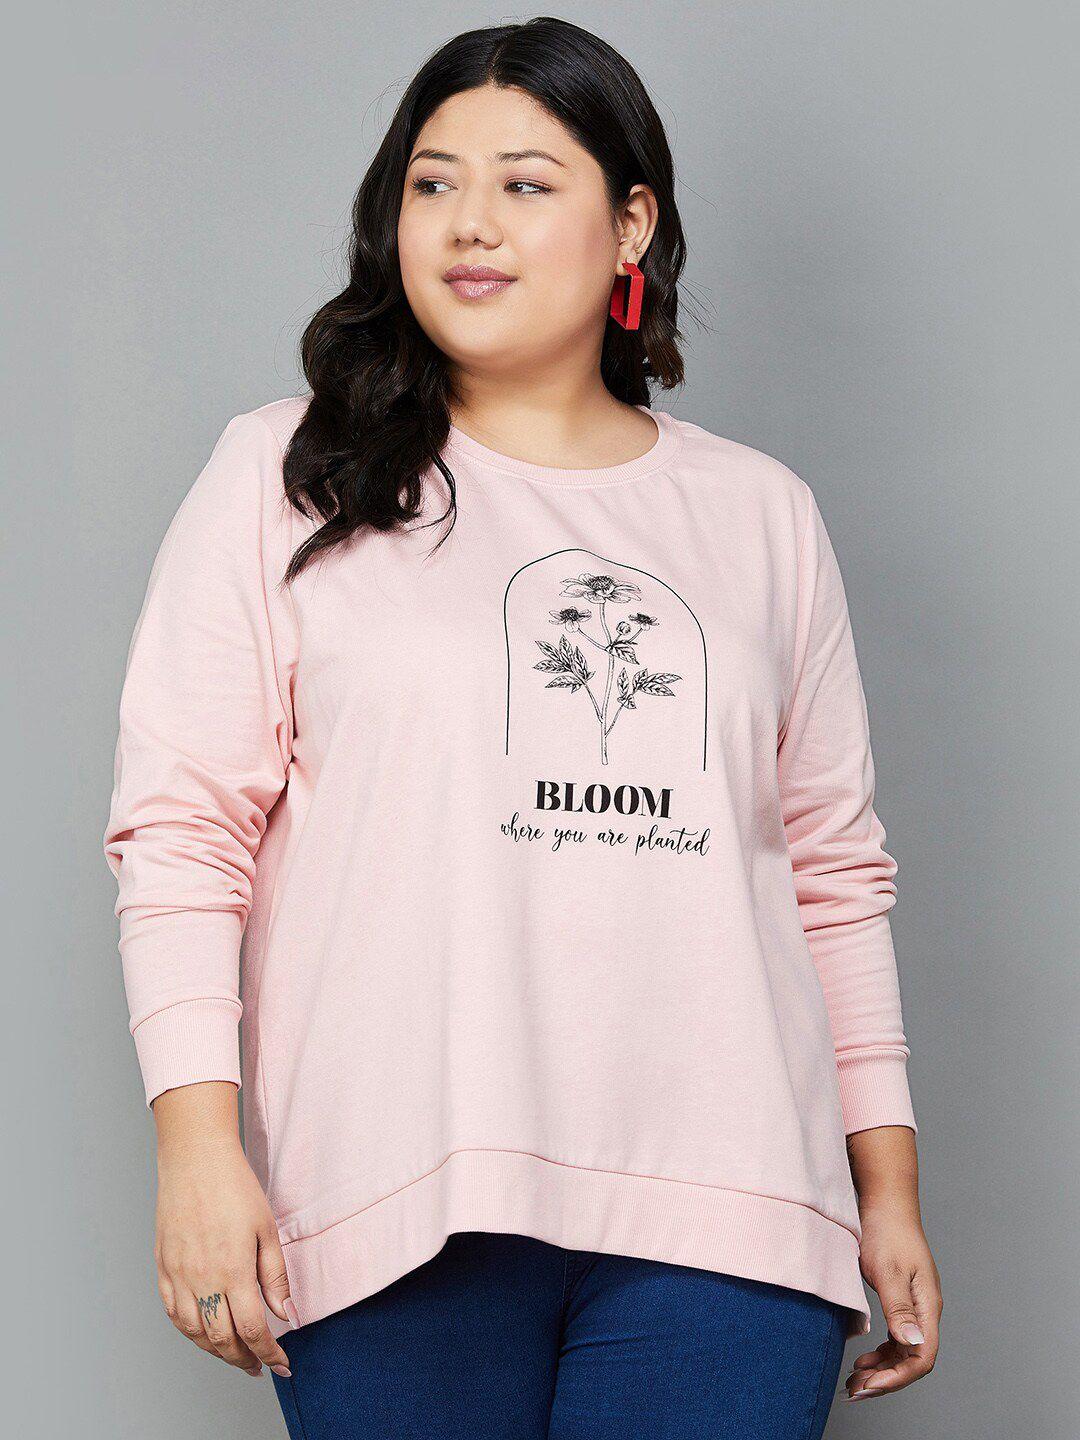 nexus by lifestyle plus size graphic printed cotton sweatshirt